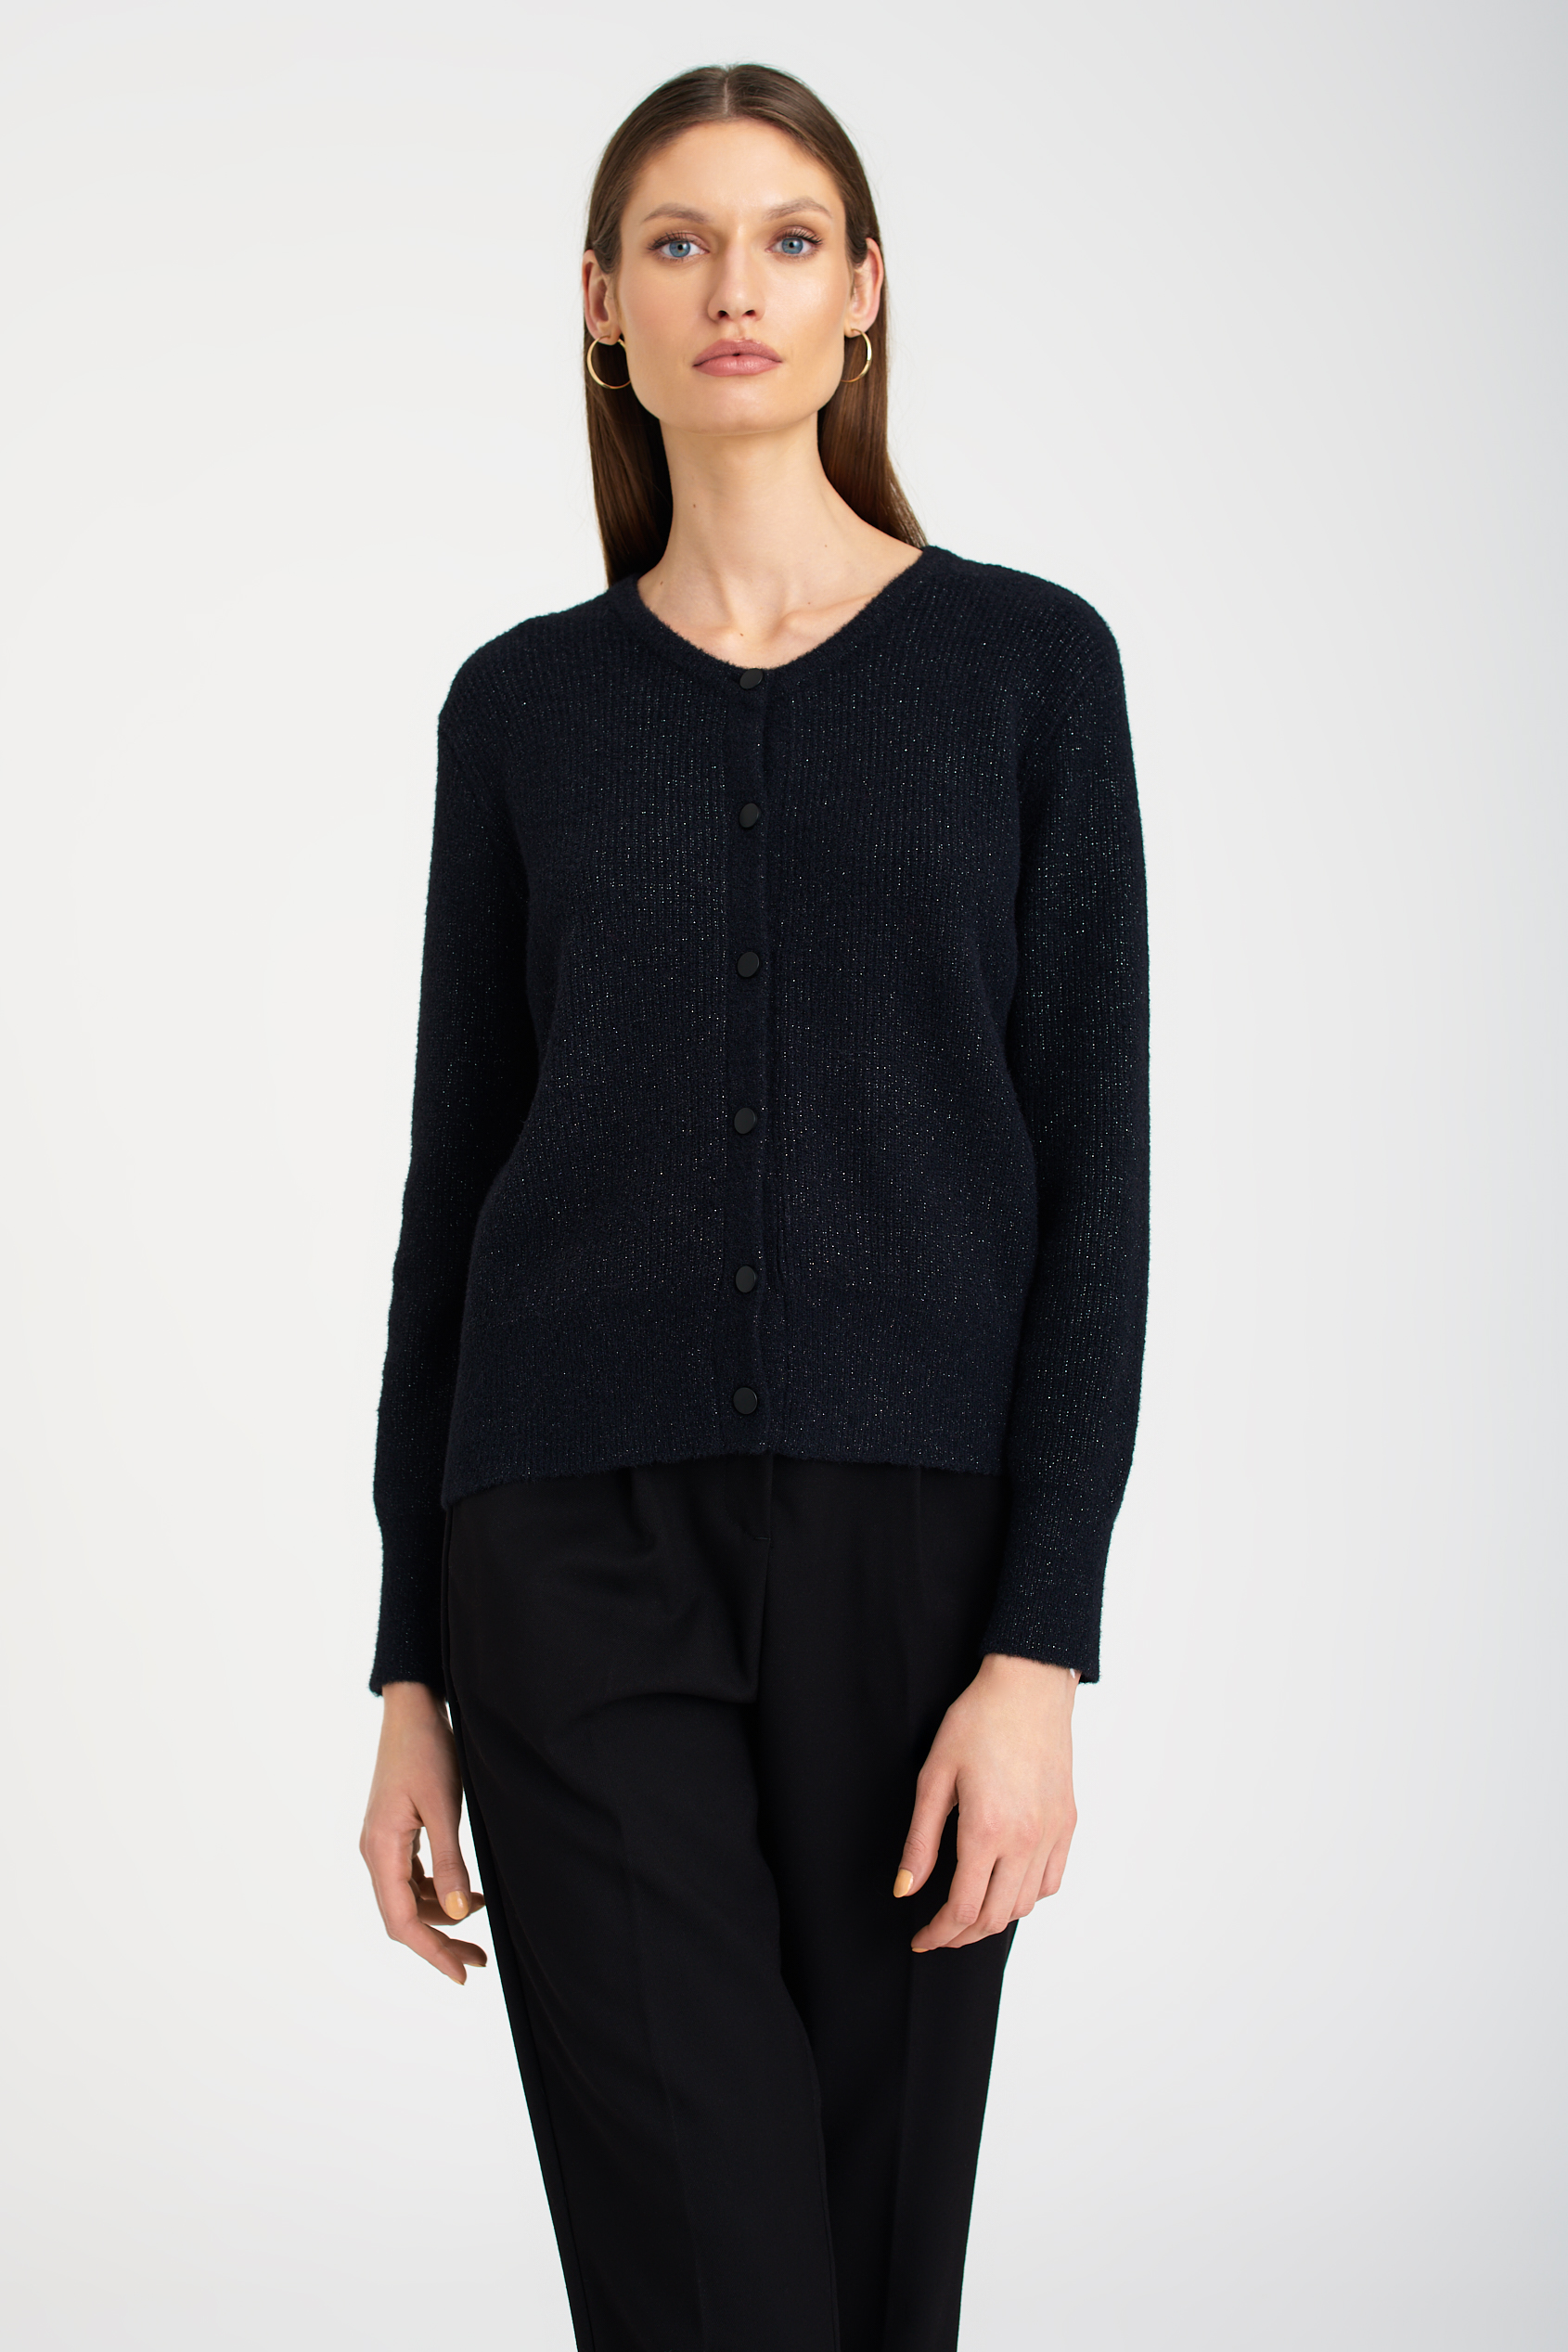 Greenpoint Woman's Sweater SWE656W2299S00 Shiny